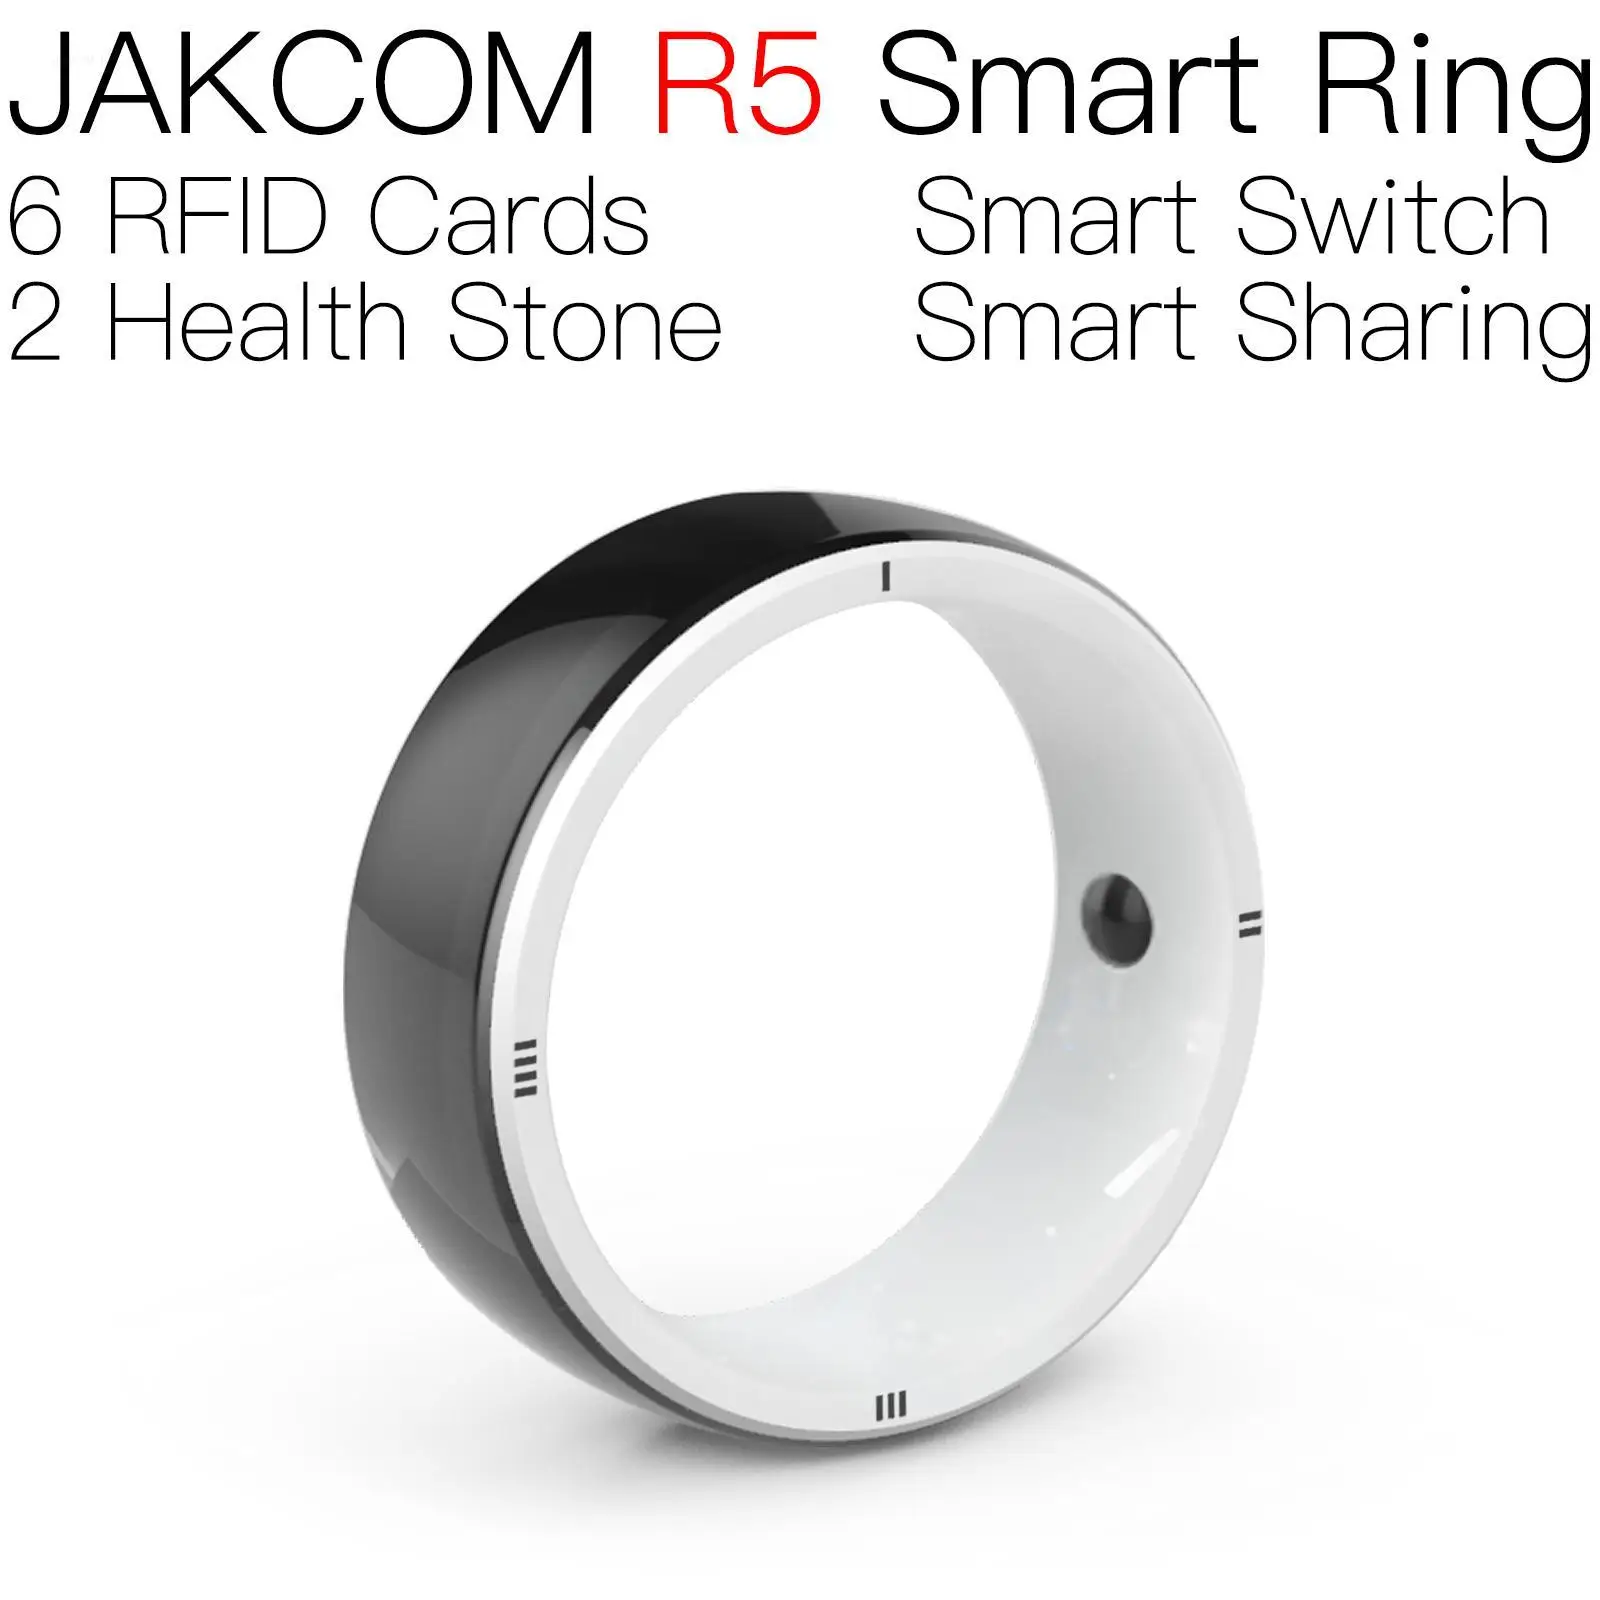 

JAKCOM R5 Smart Ring Newer than cardholder rfid khz white card rewrite office 2019 professional plus key nfc